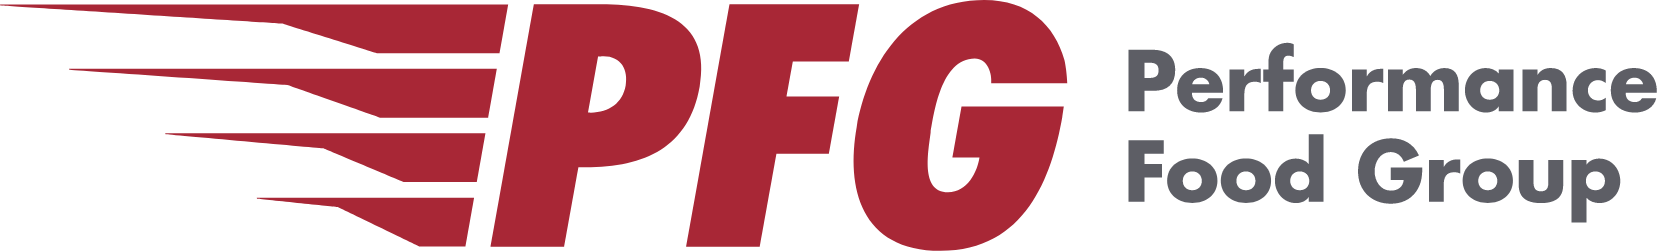 Performance Food Group logo large (transparent PNG)